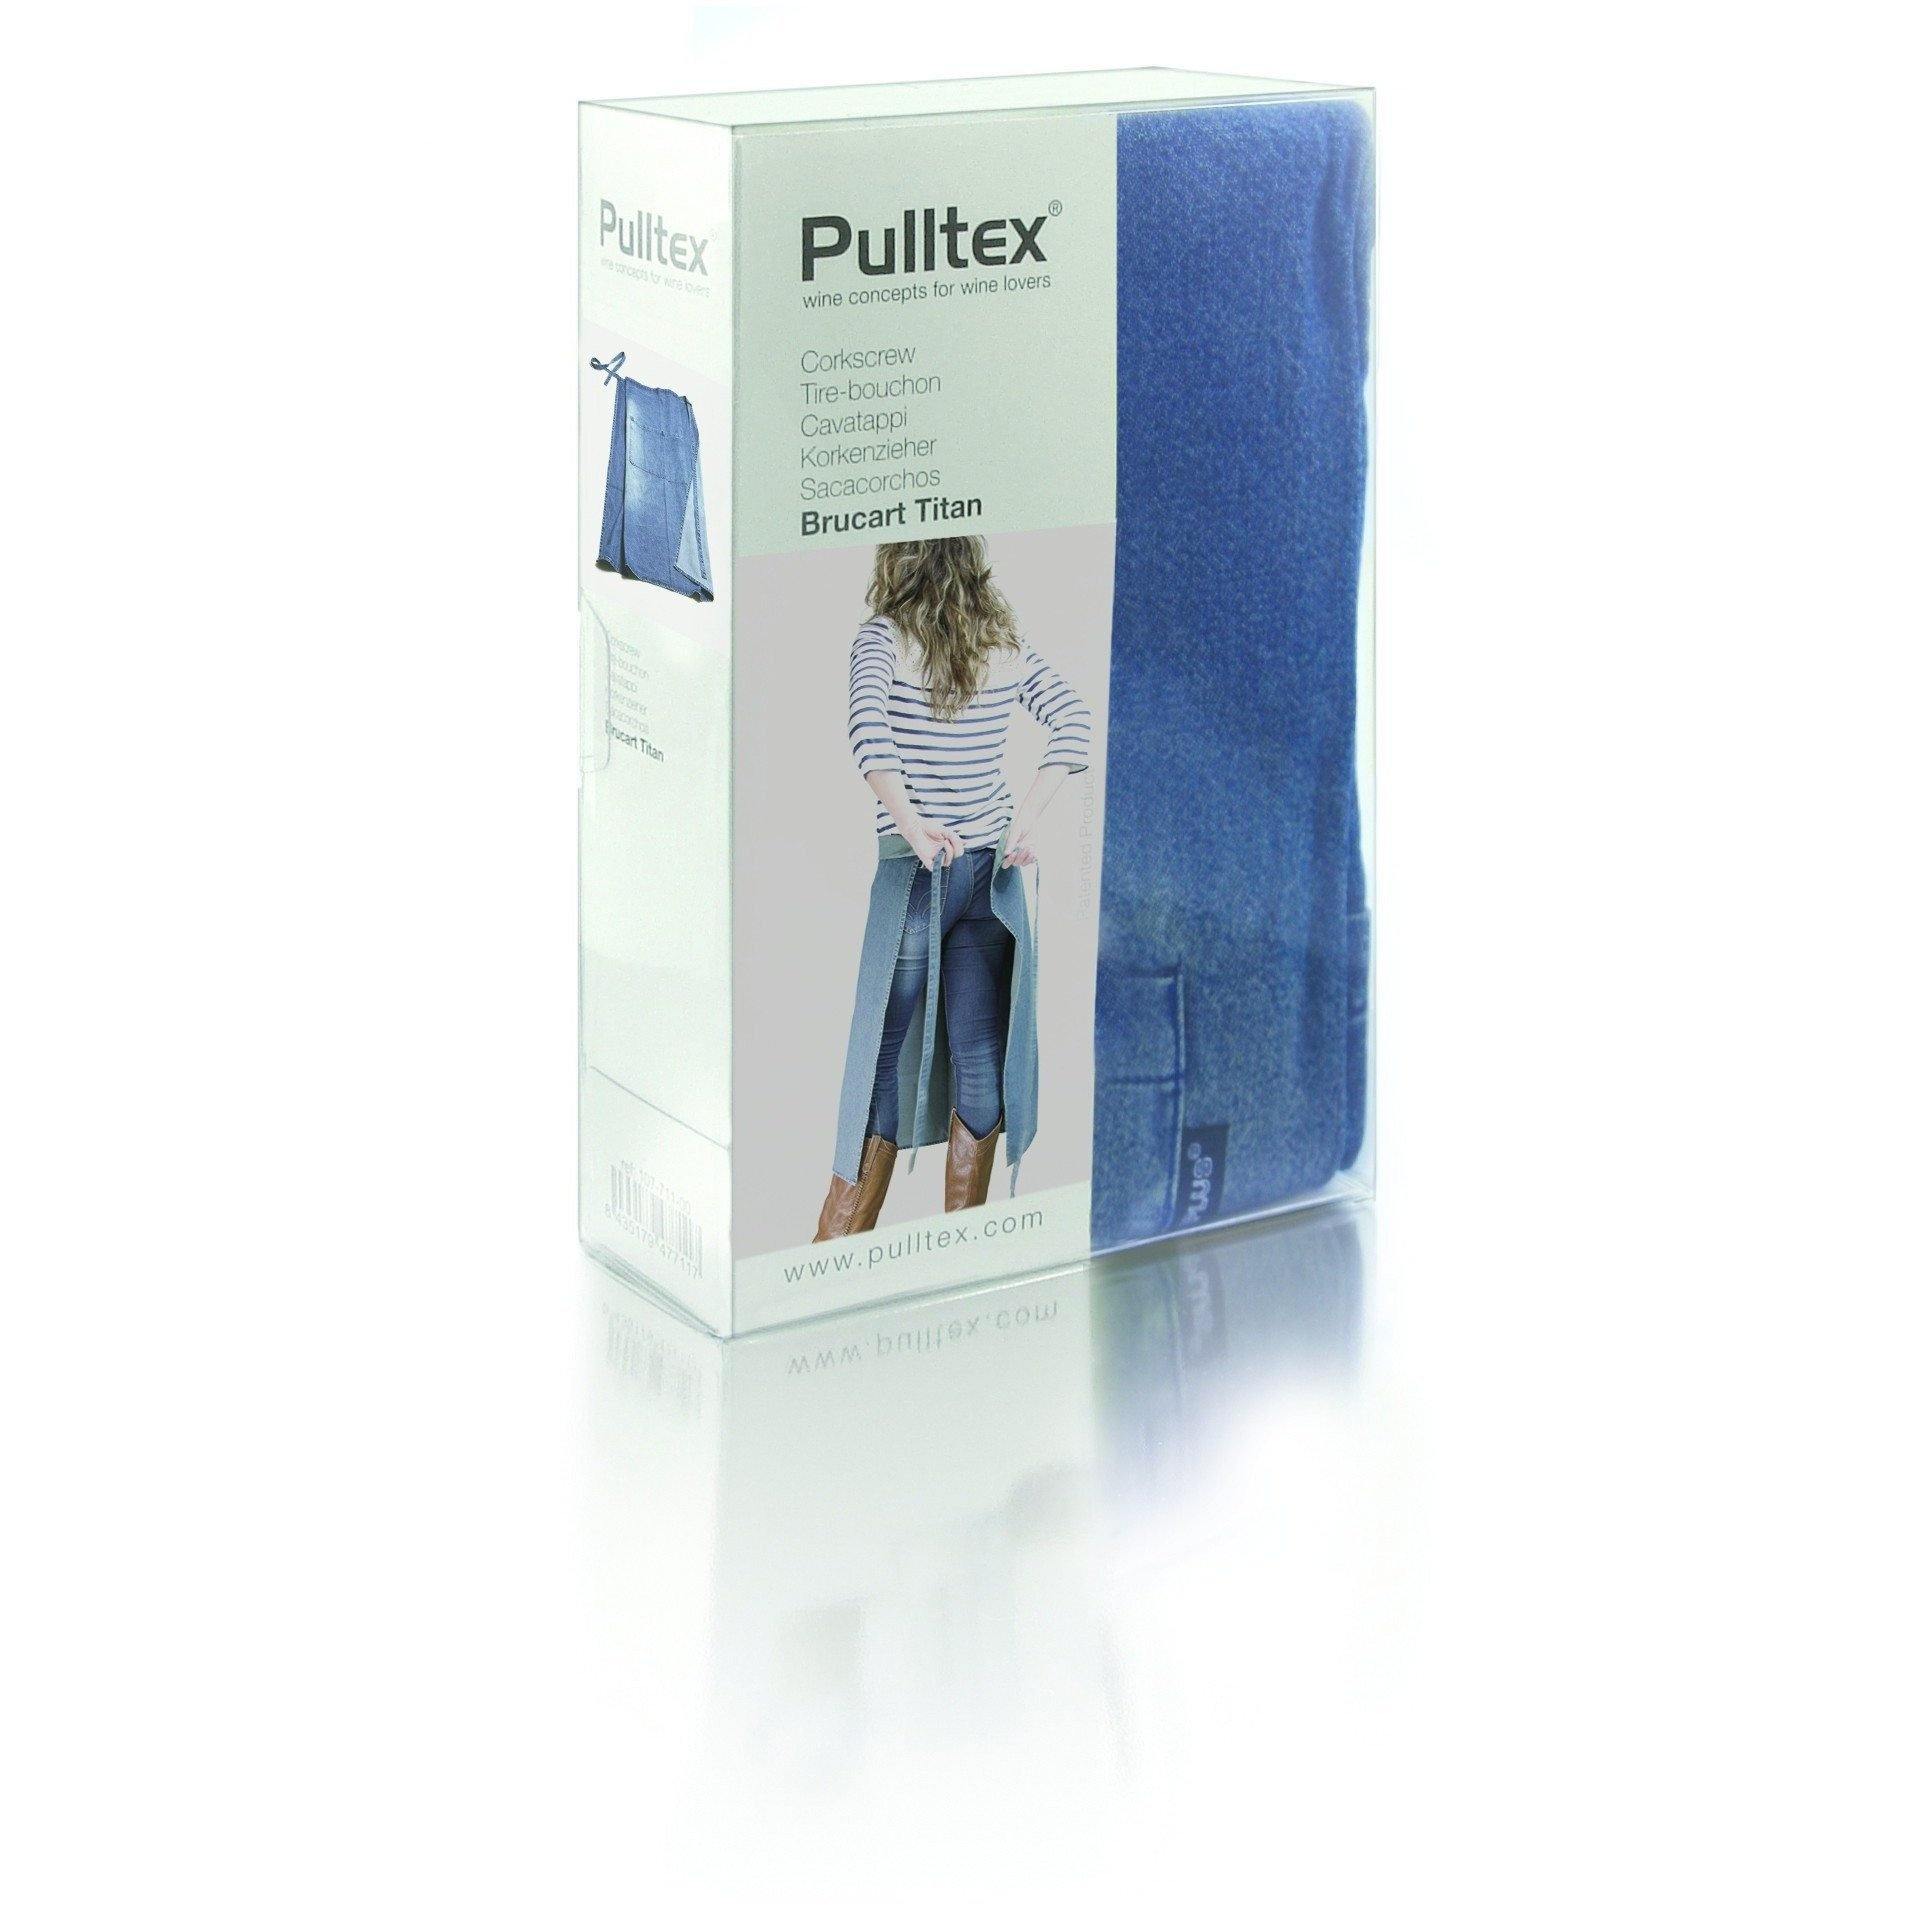 Jeans Half Apron from Pulltex - Pasta Kitchen (tutto pasta)